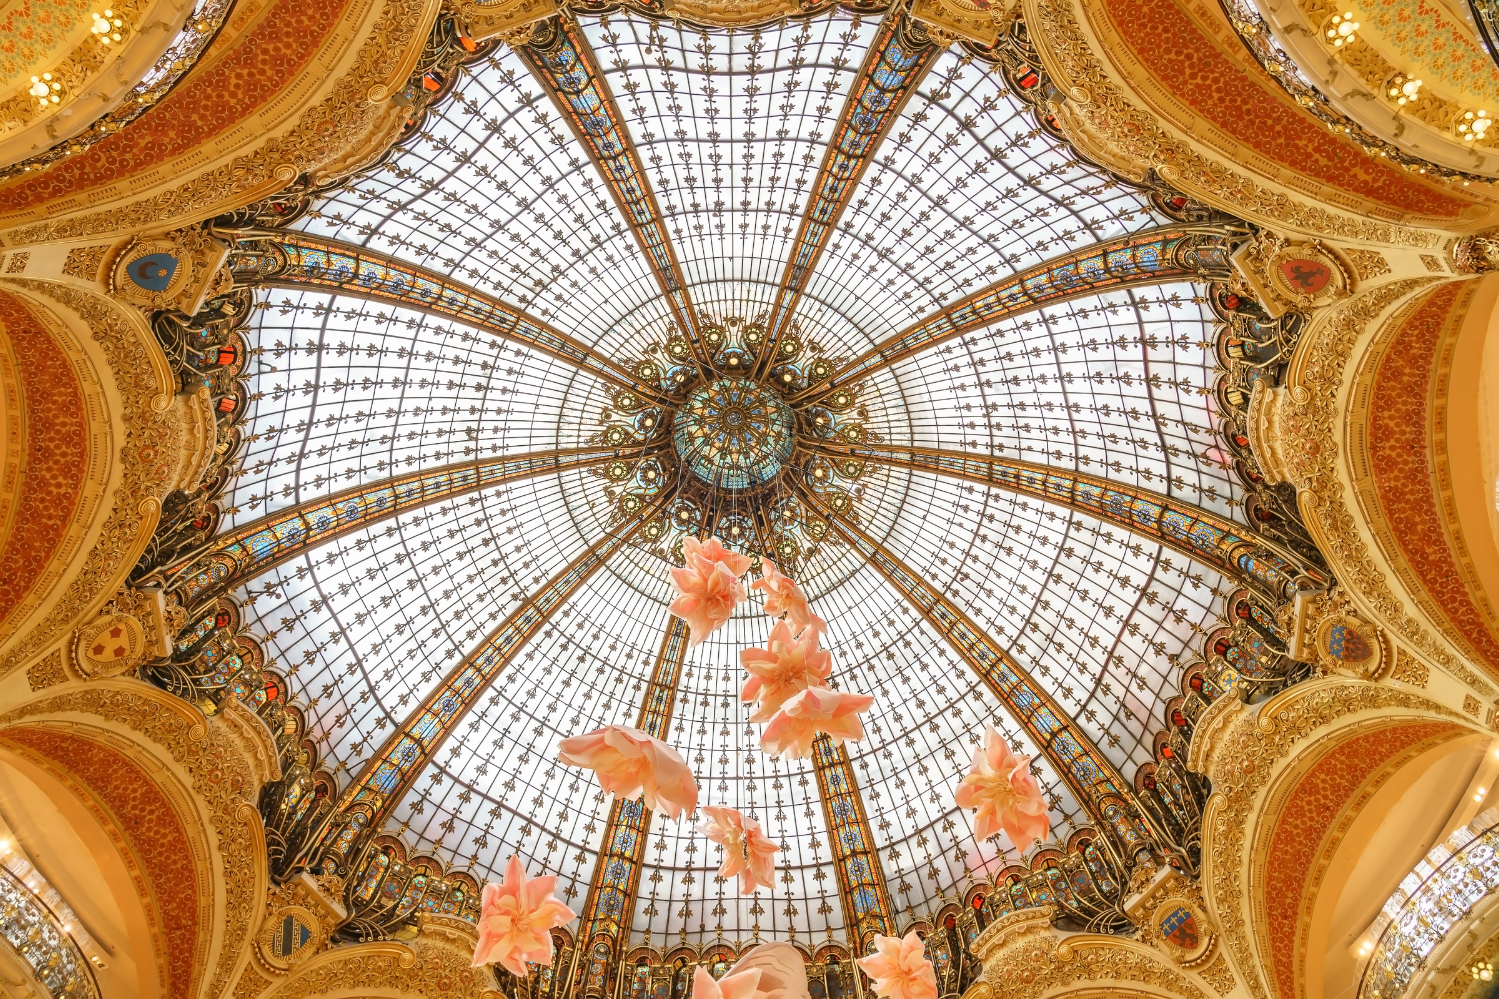 Dome of Galeries Lafayette Haussmann